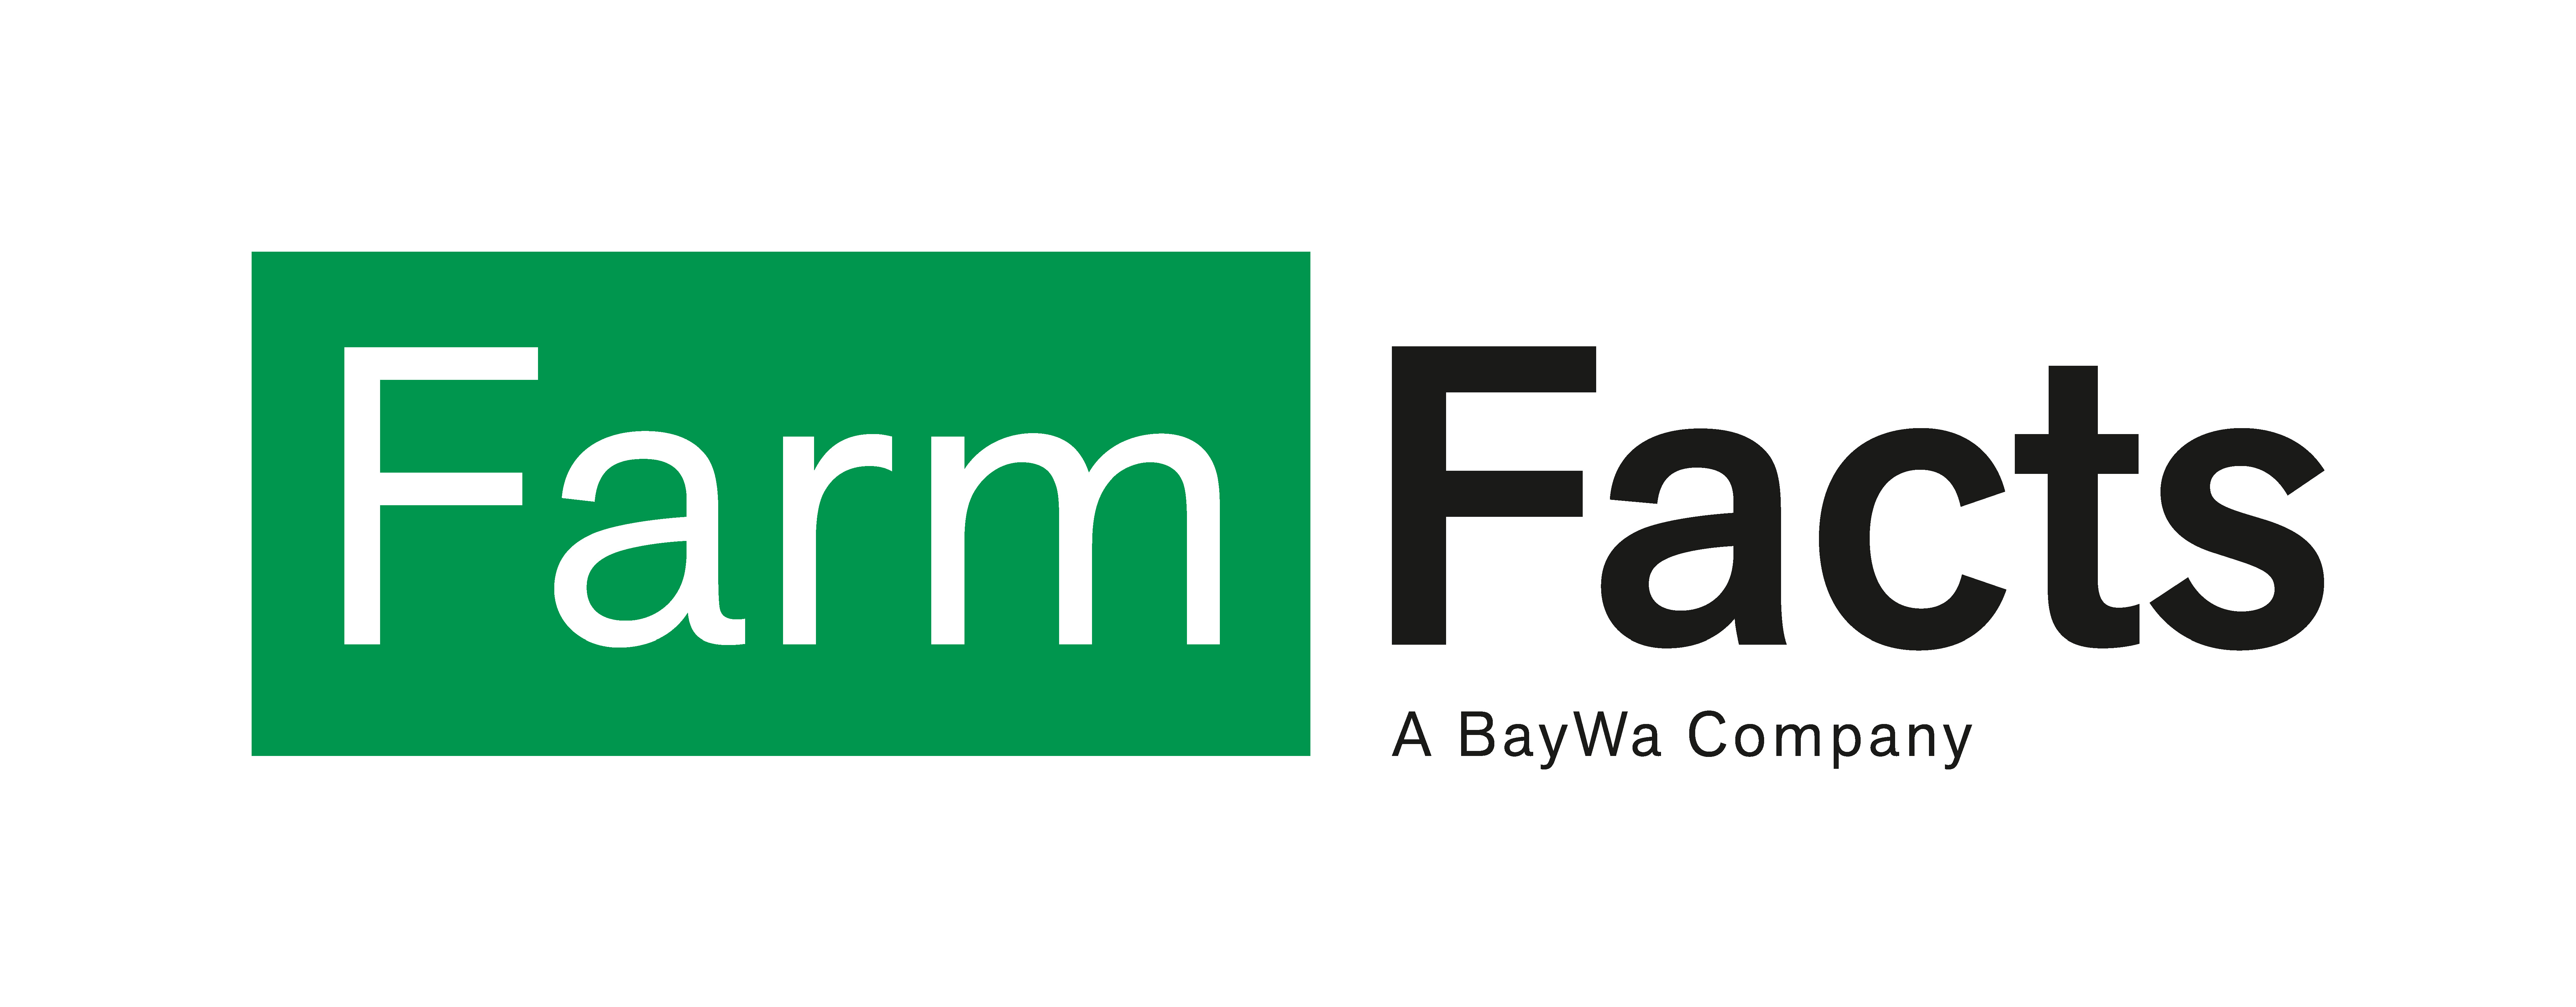 FarmFacts Logo 2